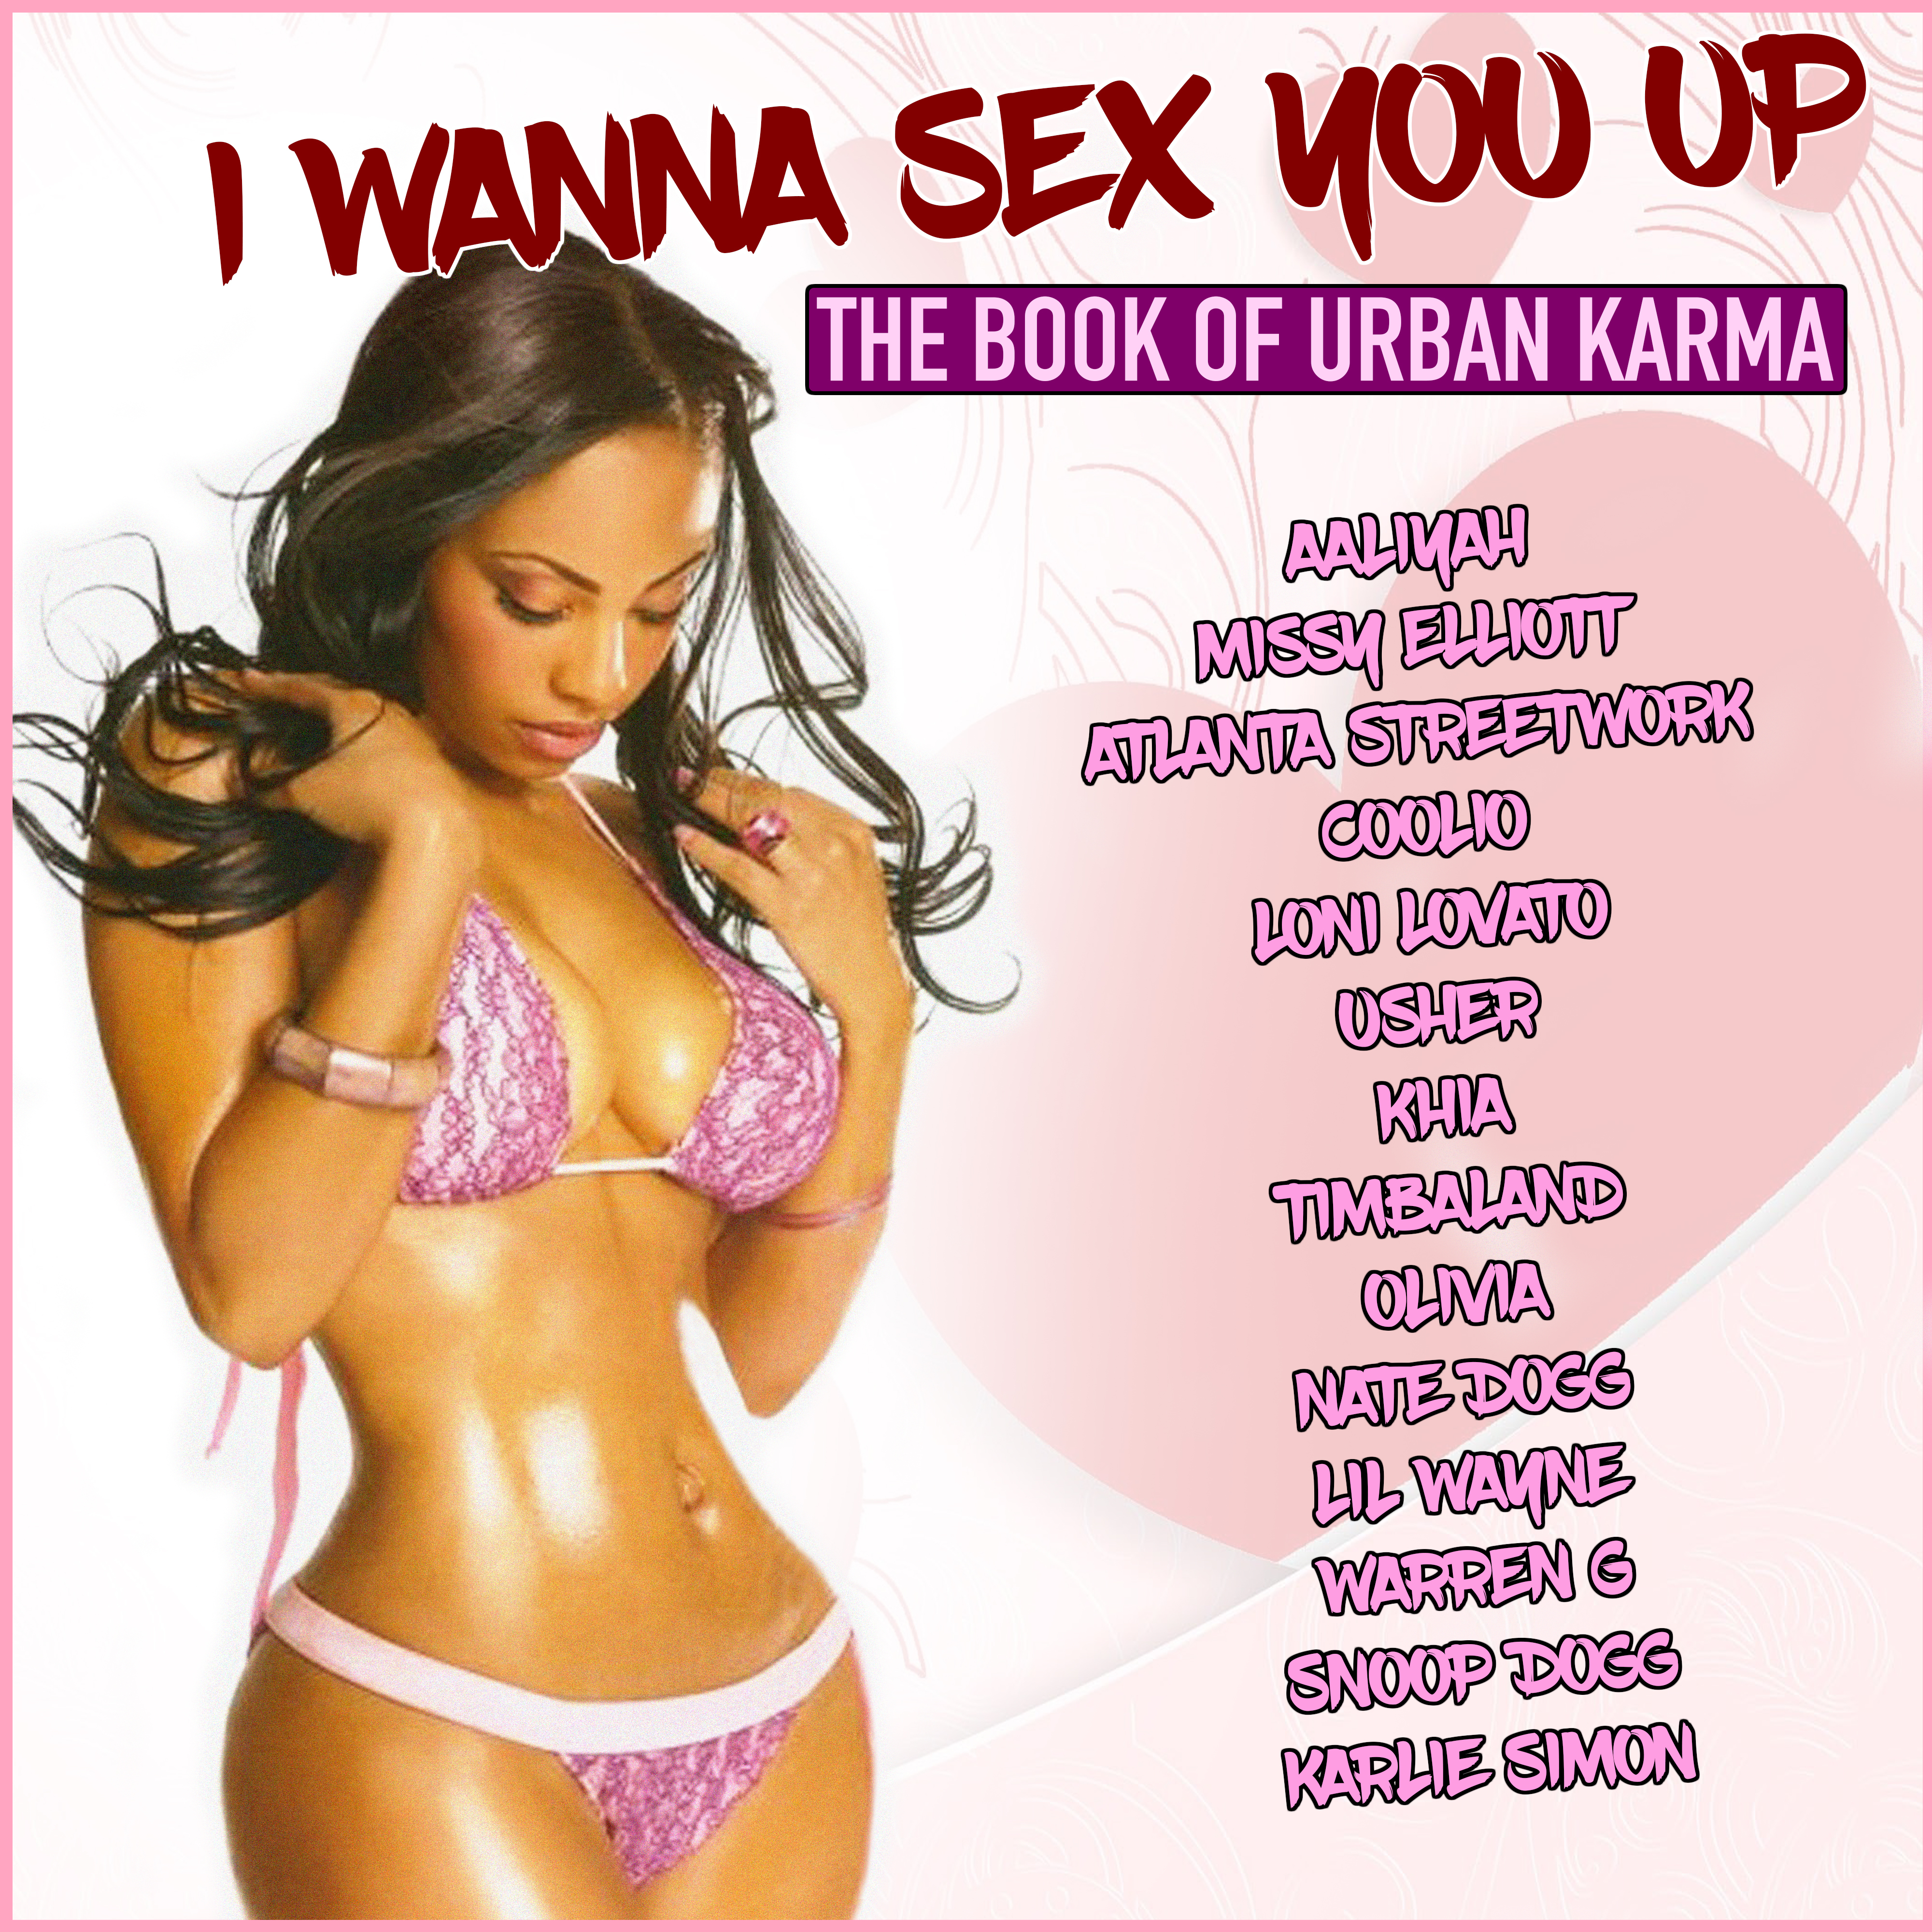 I Wanna *** You Up - The Book of Urban Karma